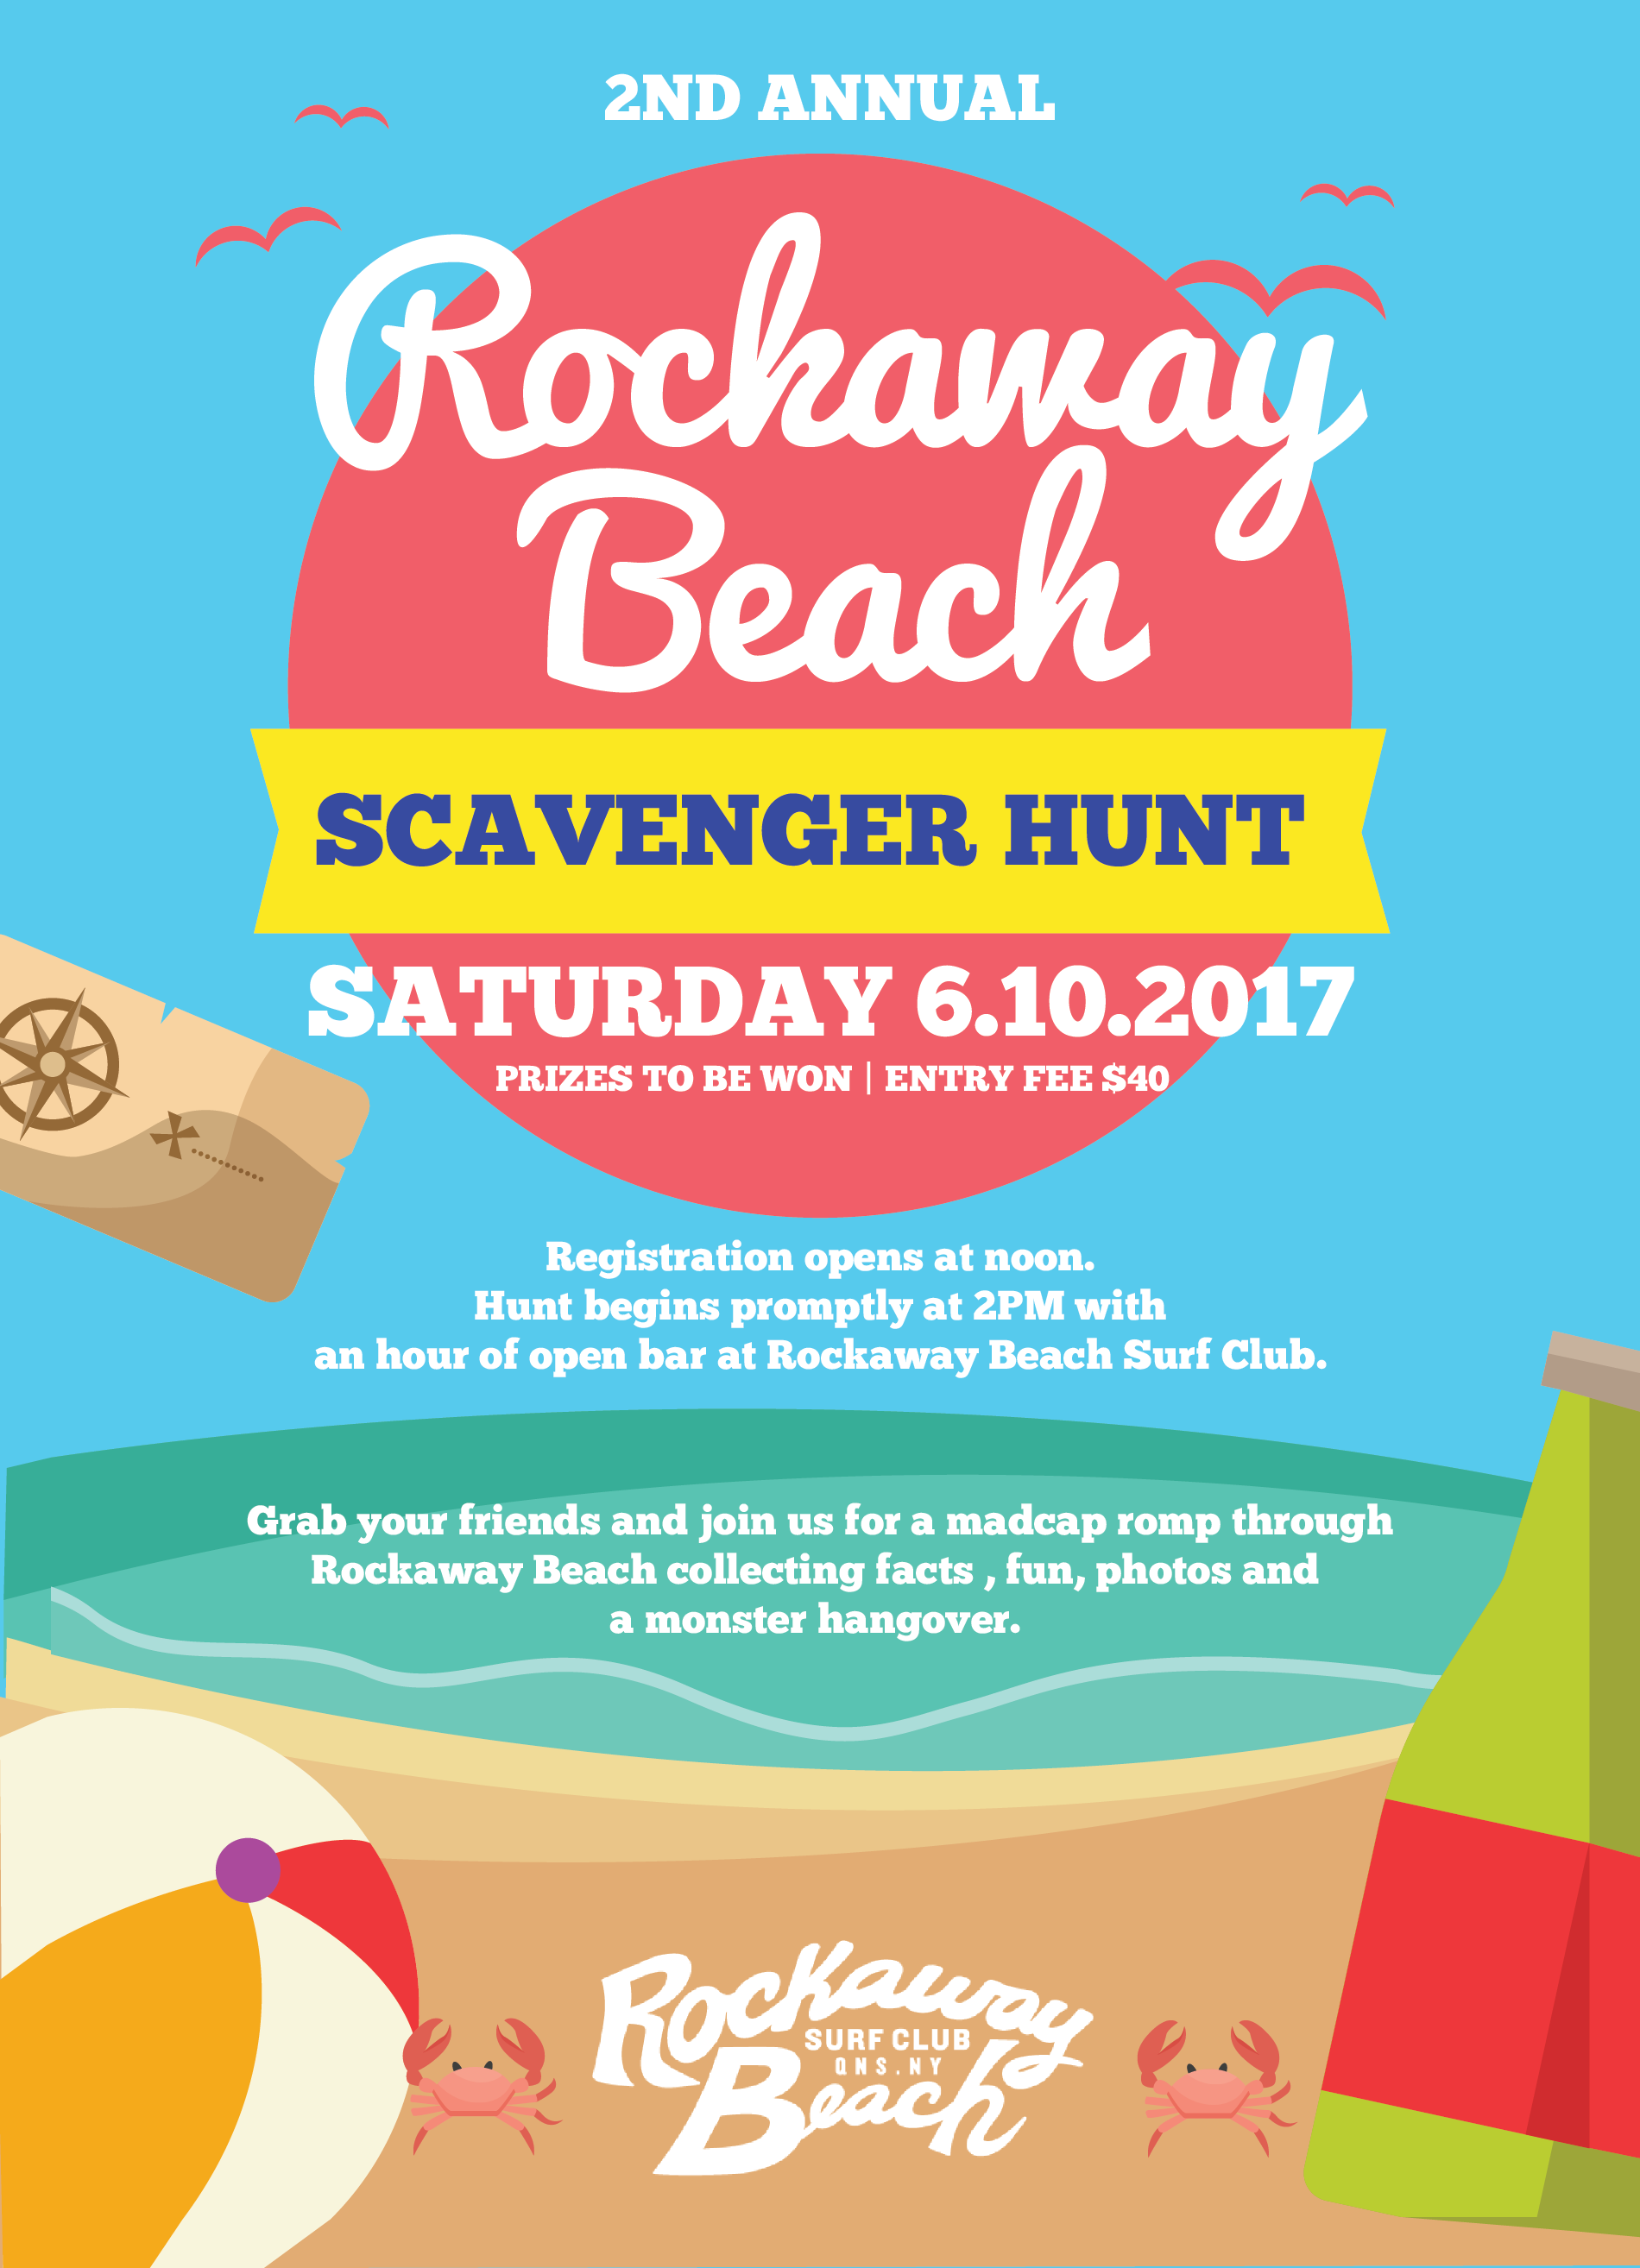 2nd Annual Rockaway Beach Scavenger Hunt Rockaway Beach Surf Club